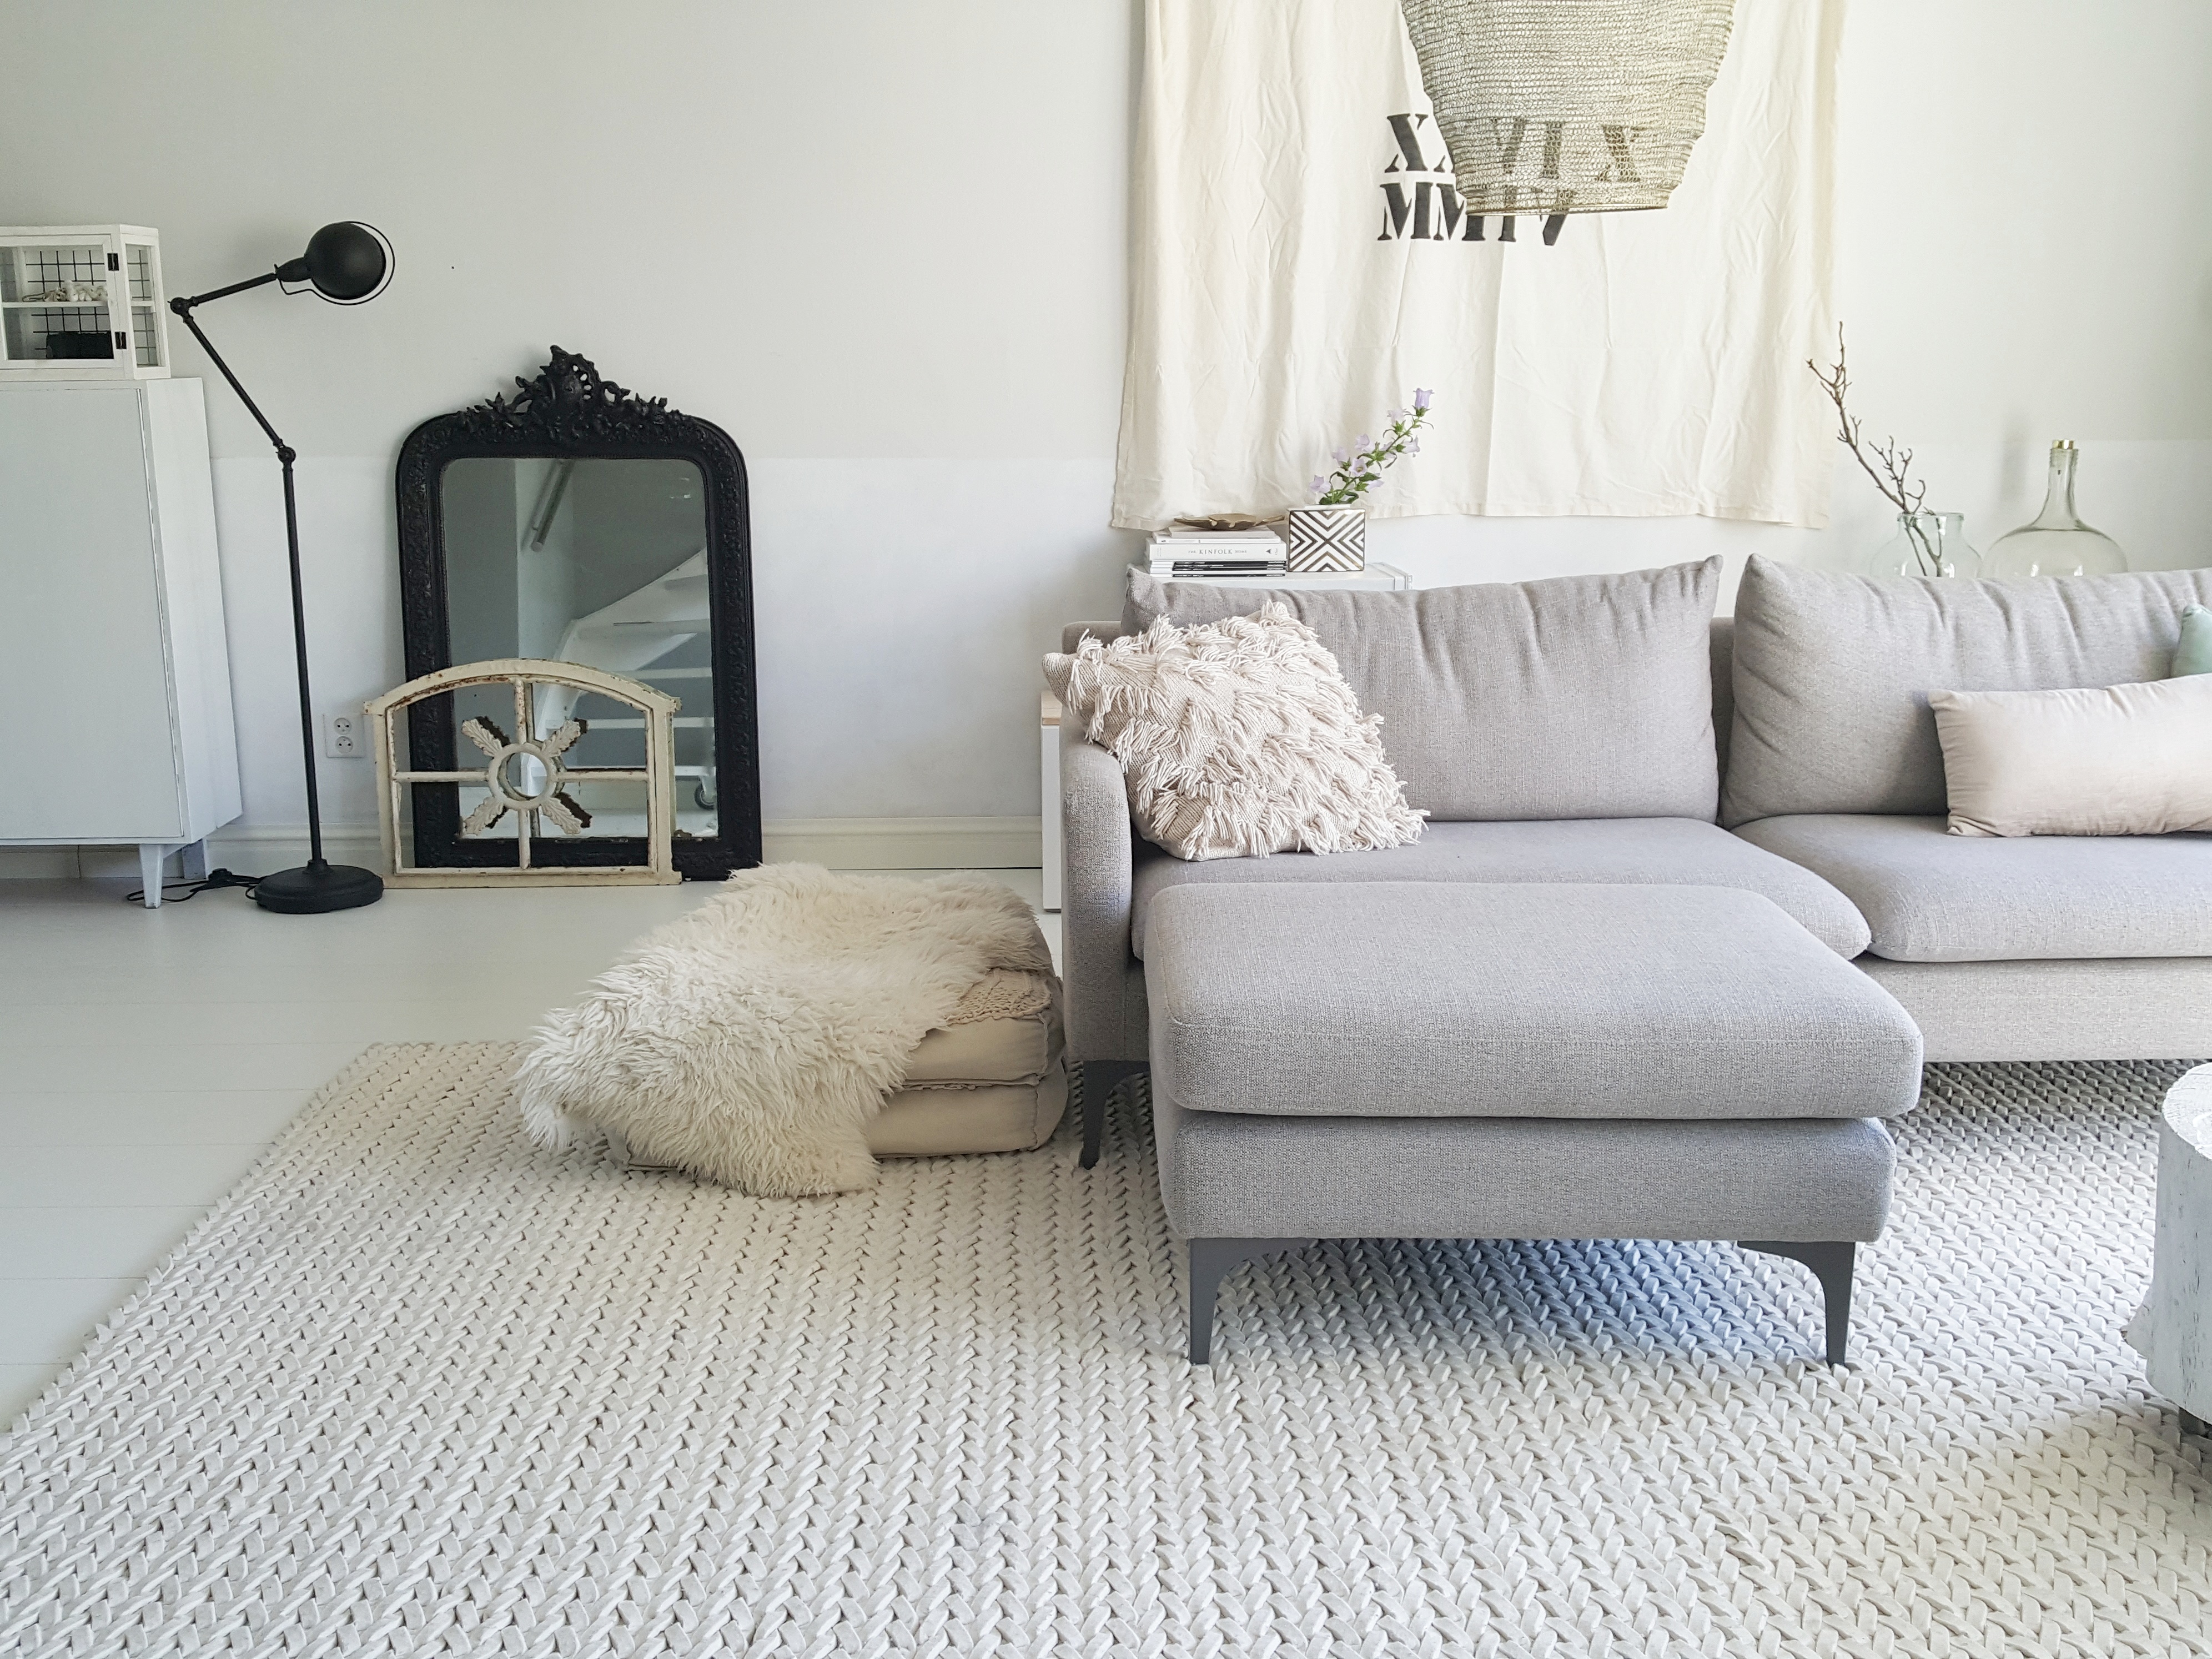 kroeg litteken Actuator sofacompany – House-Proud, Styling & Interieur